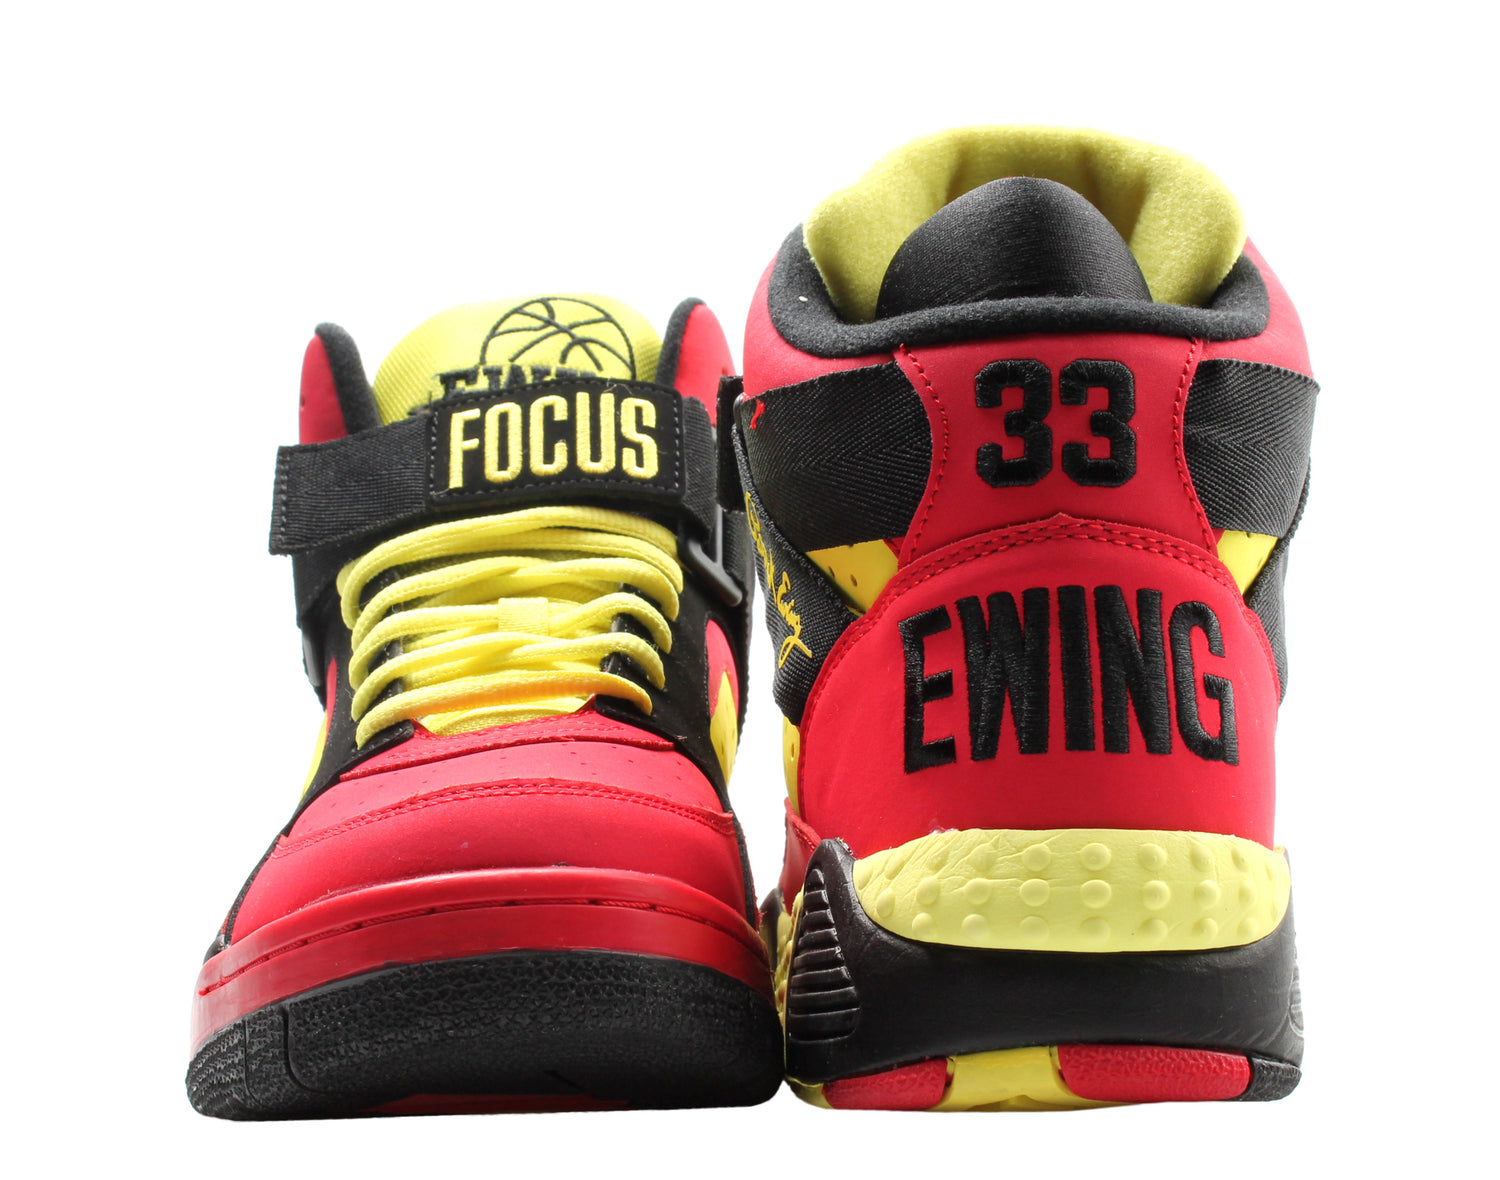 Ewing Athletics Ewing Focus Men's Basketball Shoes